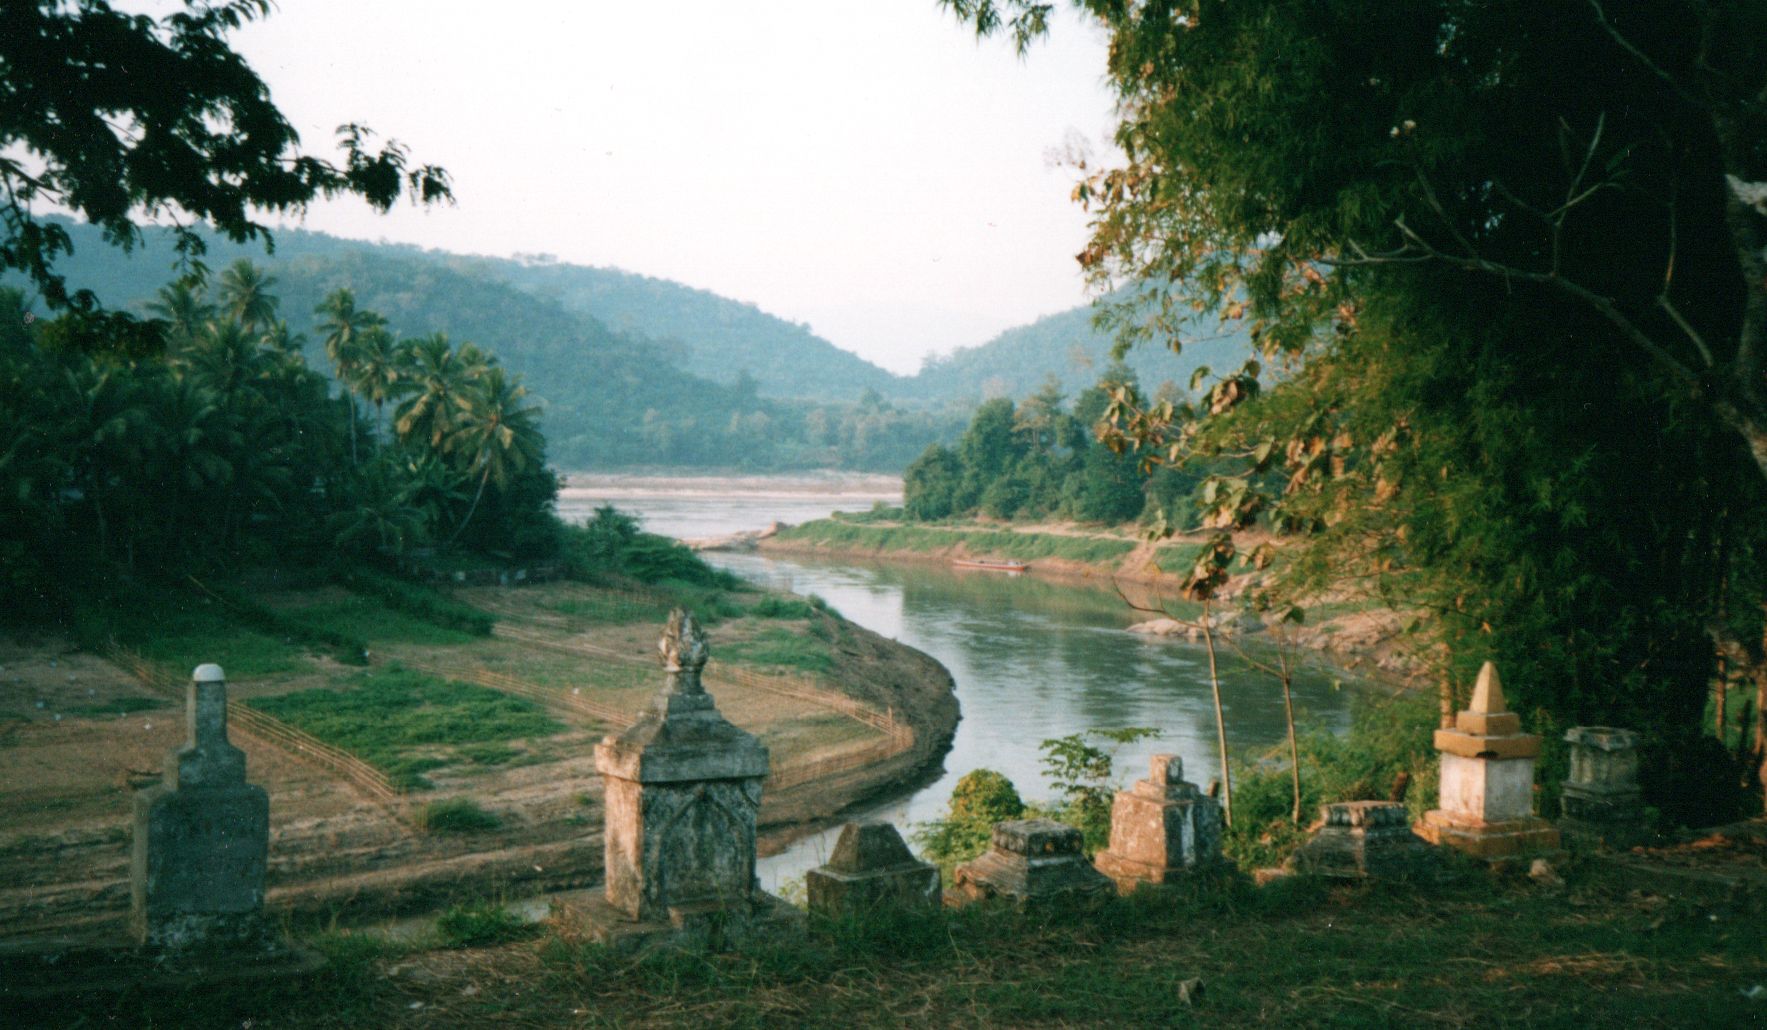 Confluence of the Mekong and Nam Khan Rivers at Luang Prabang